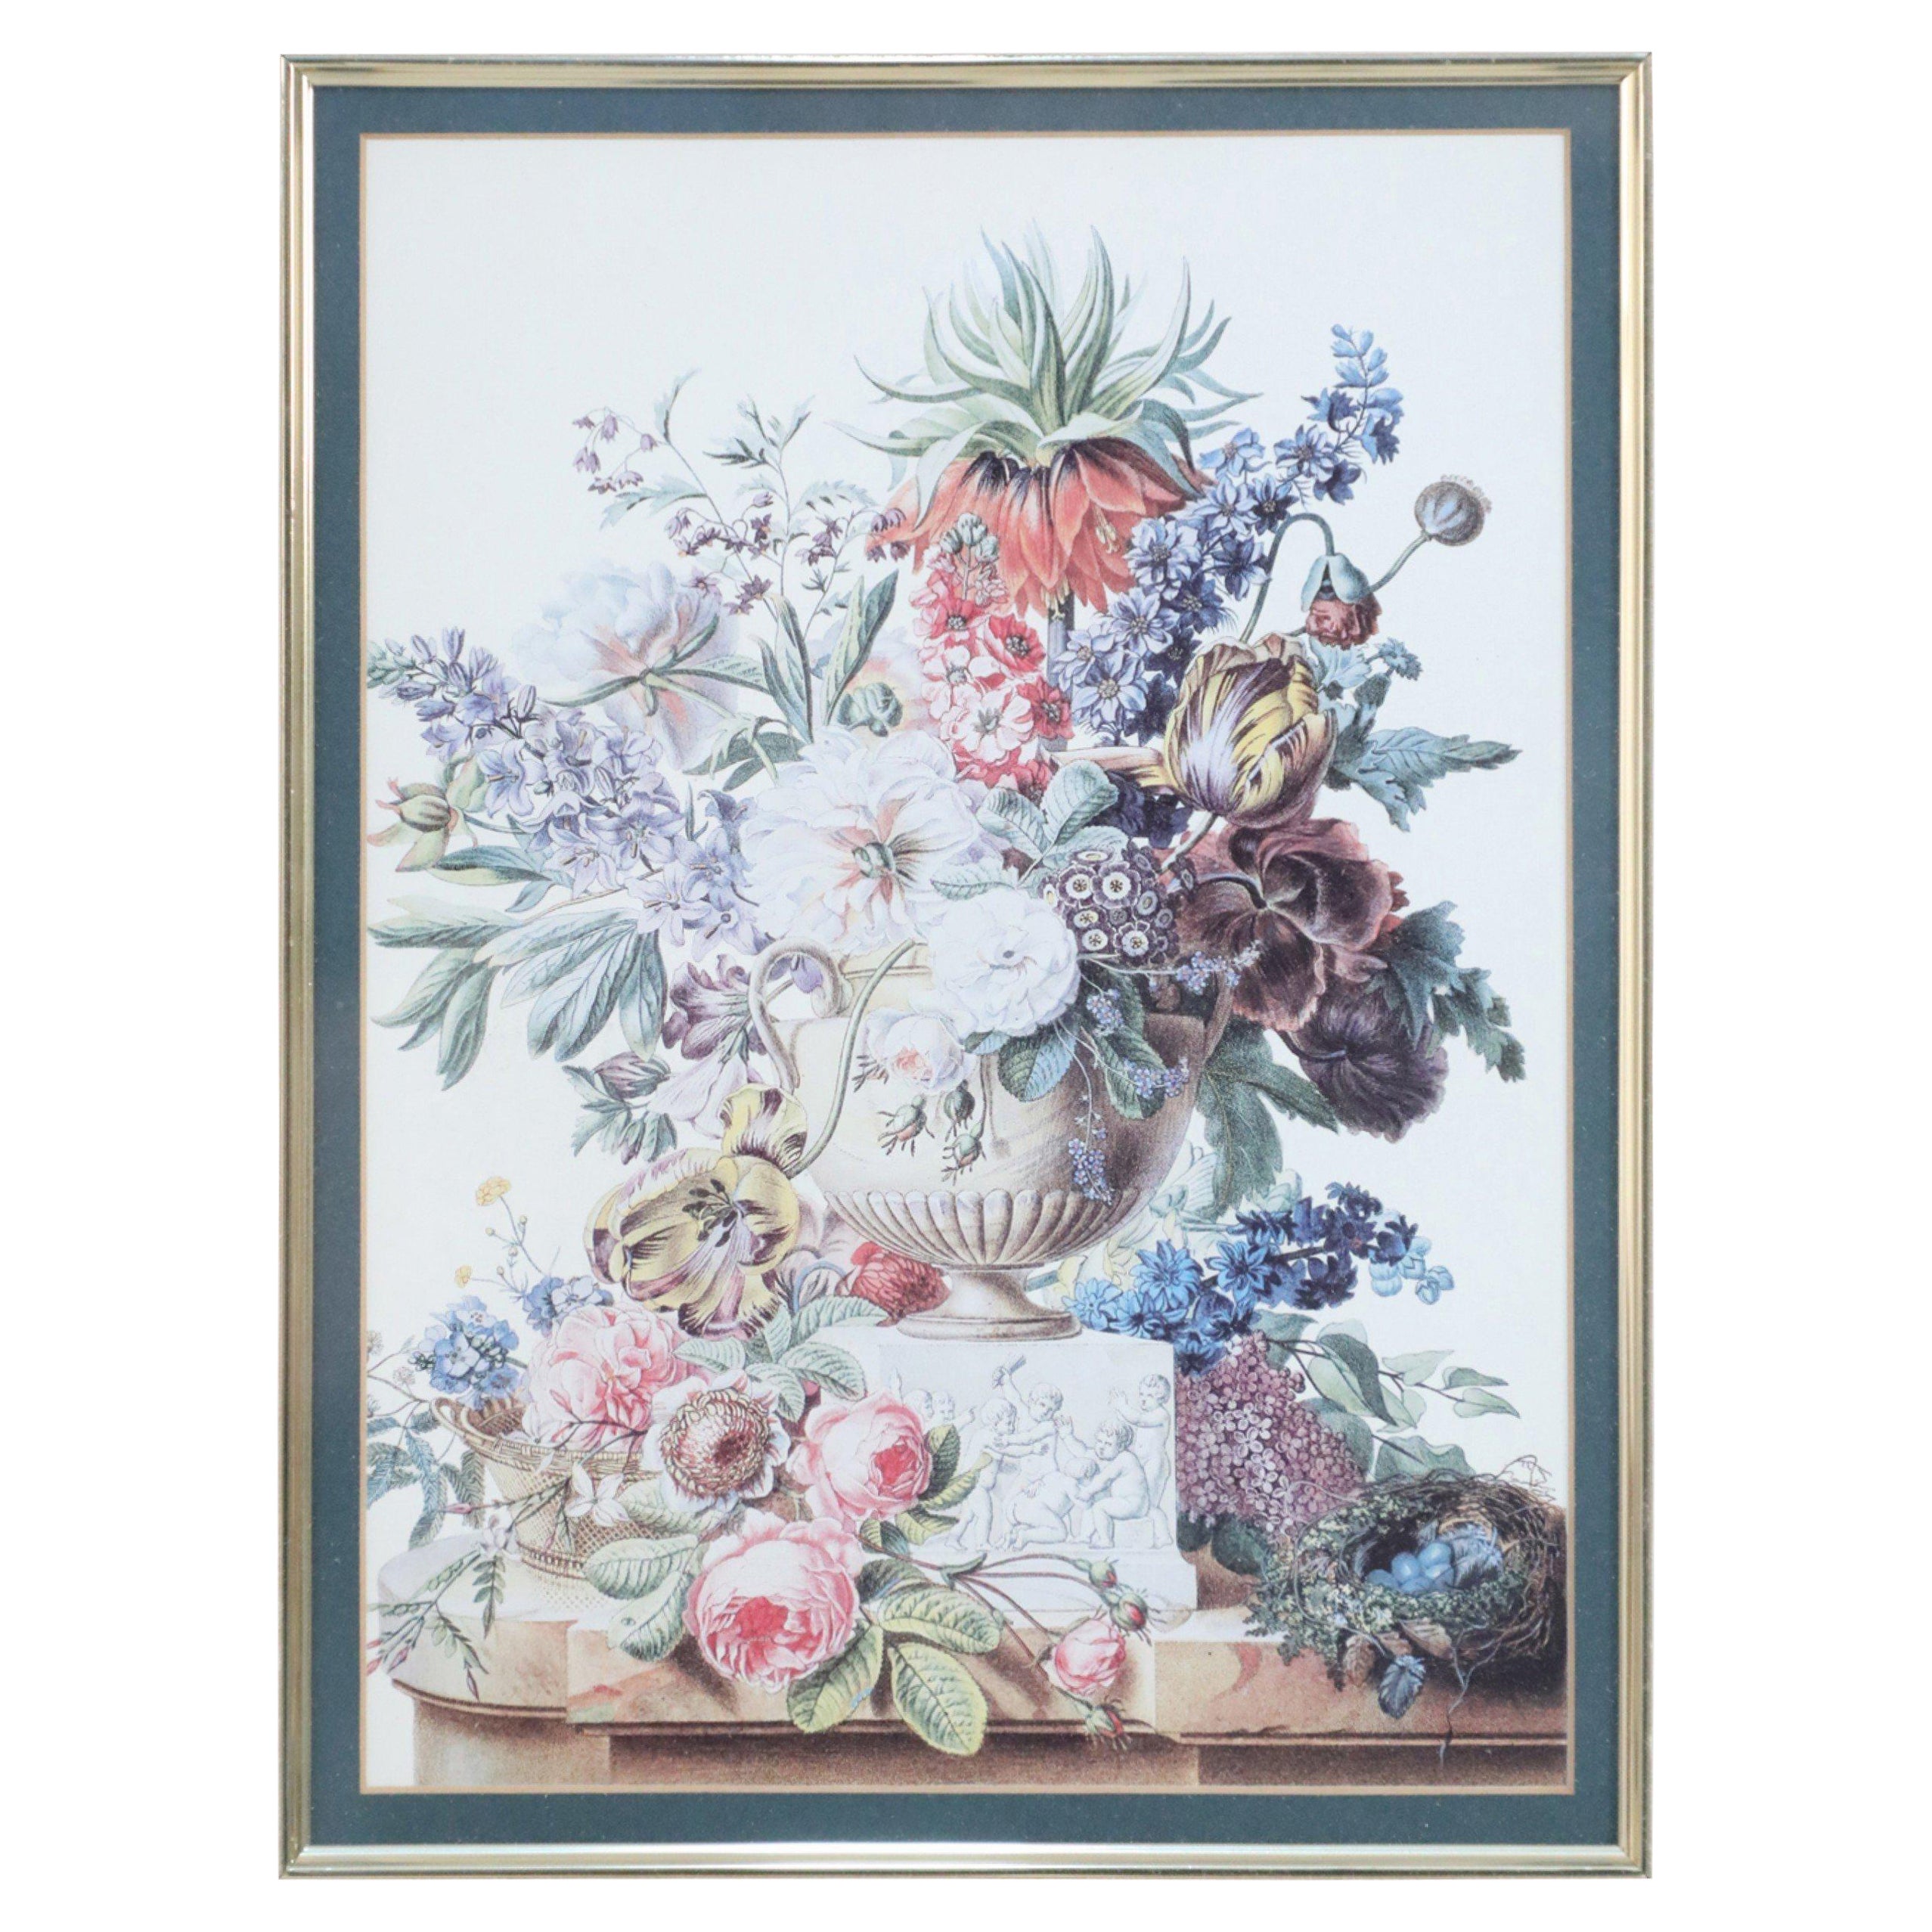 Framed Still Life Illustration of a White Marble Urn of Flowers and Bird's Nest